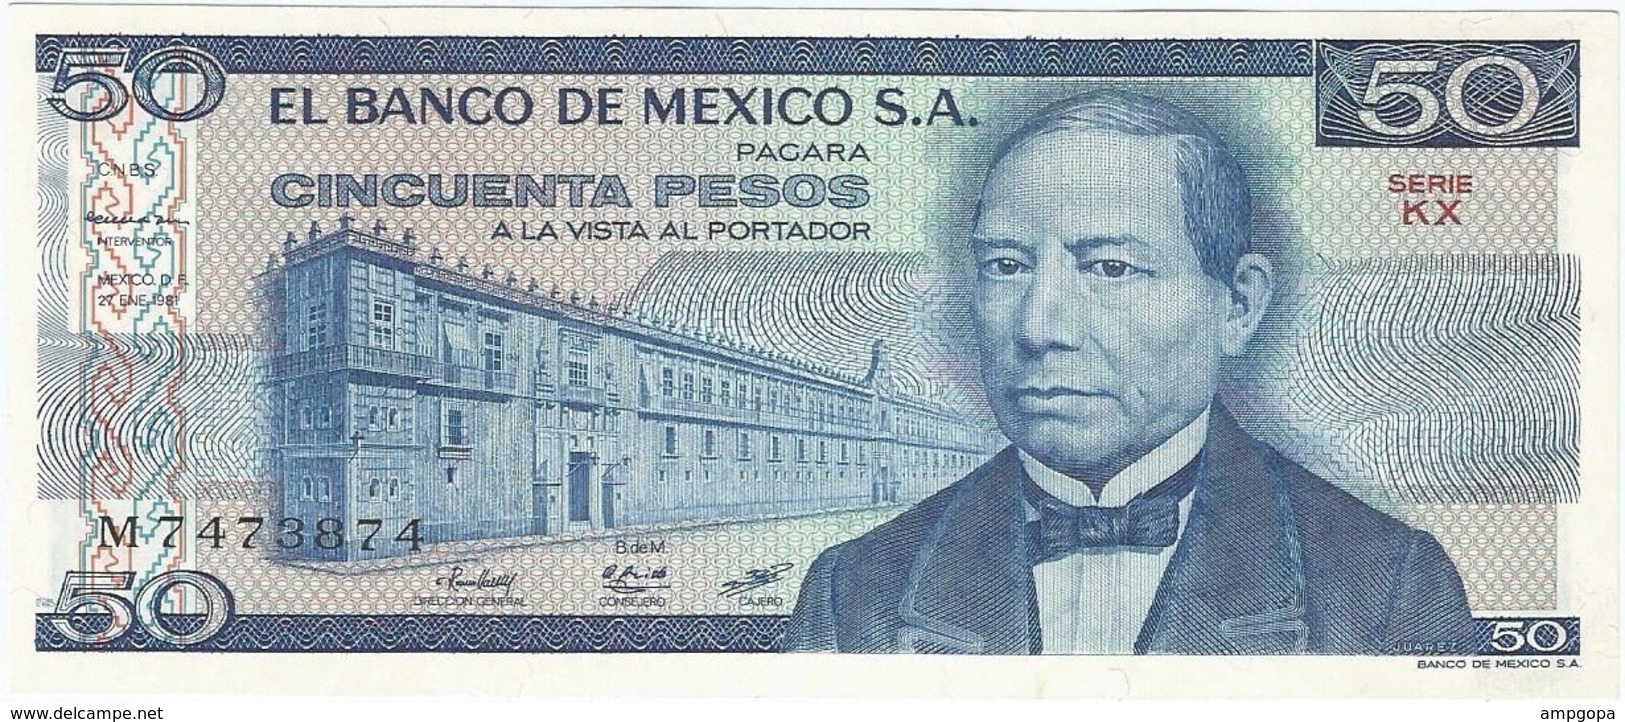 México 50 Pesos 27-1-1981 KX Pick 73 UNC - México